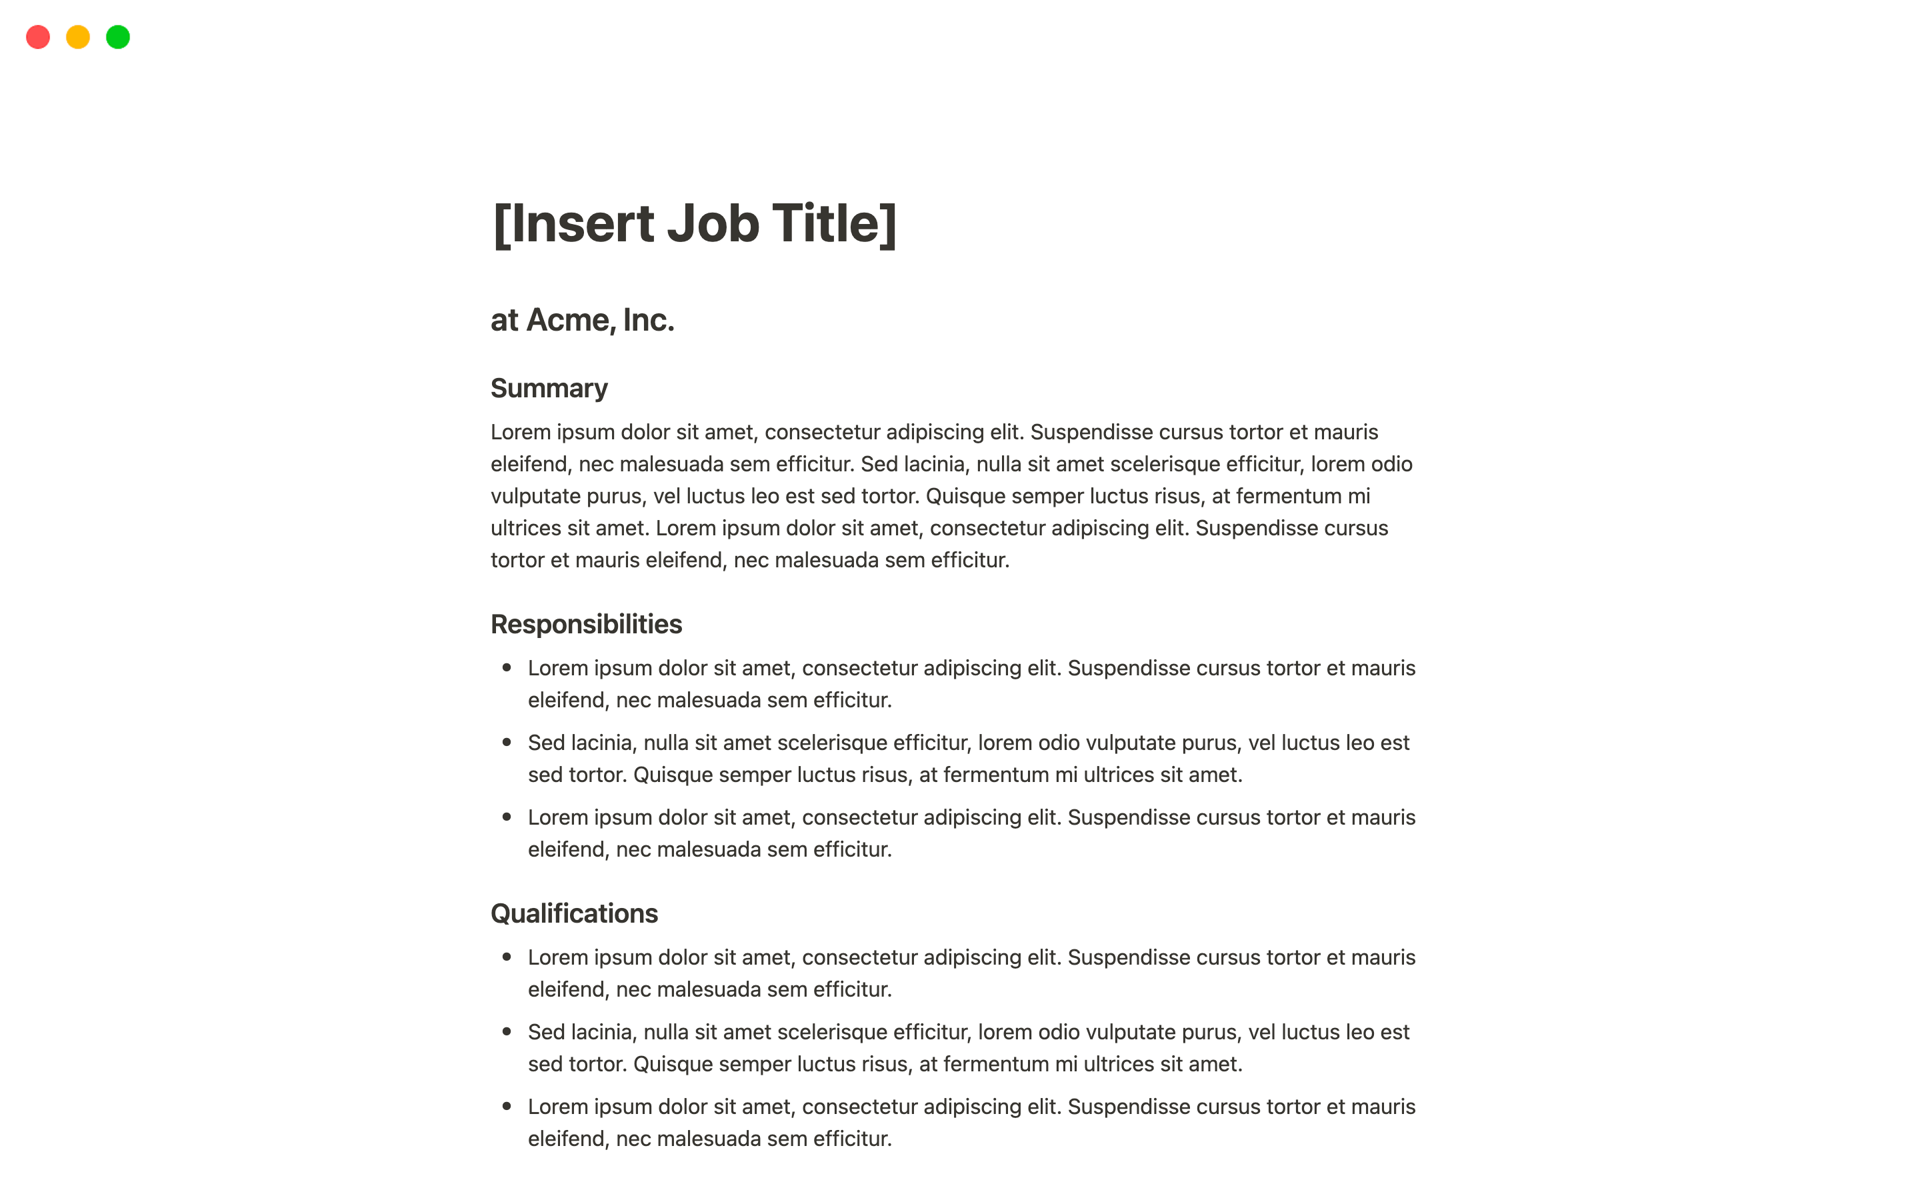 A simple job description template for recruiters.